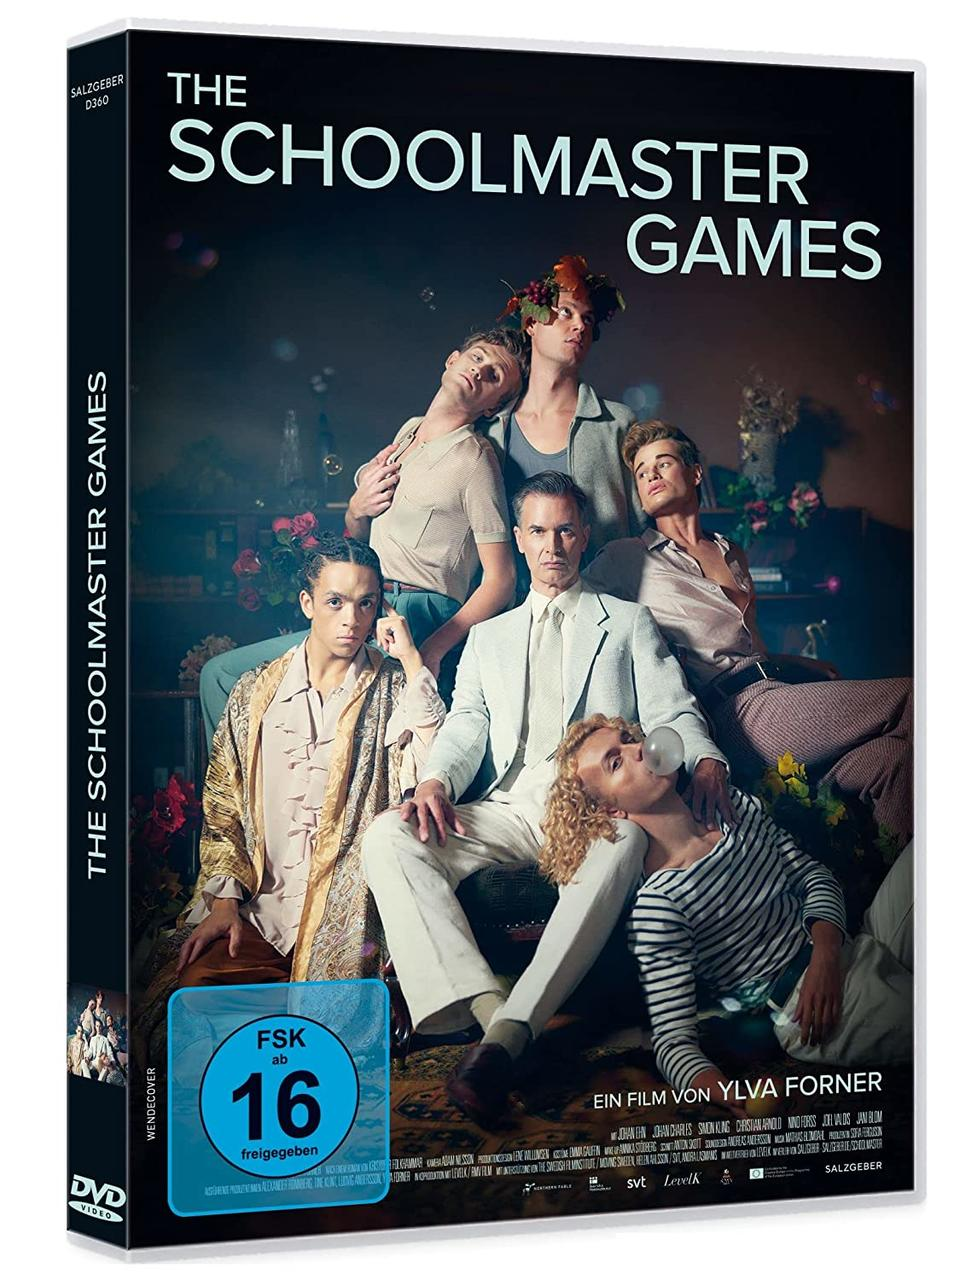 The Schoolmaster Games DVD